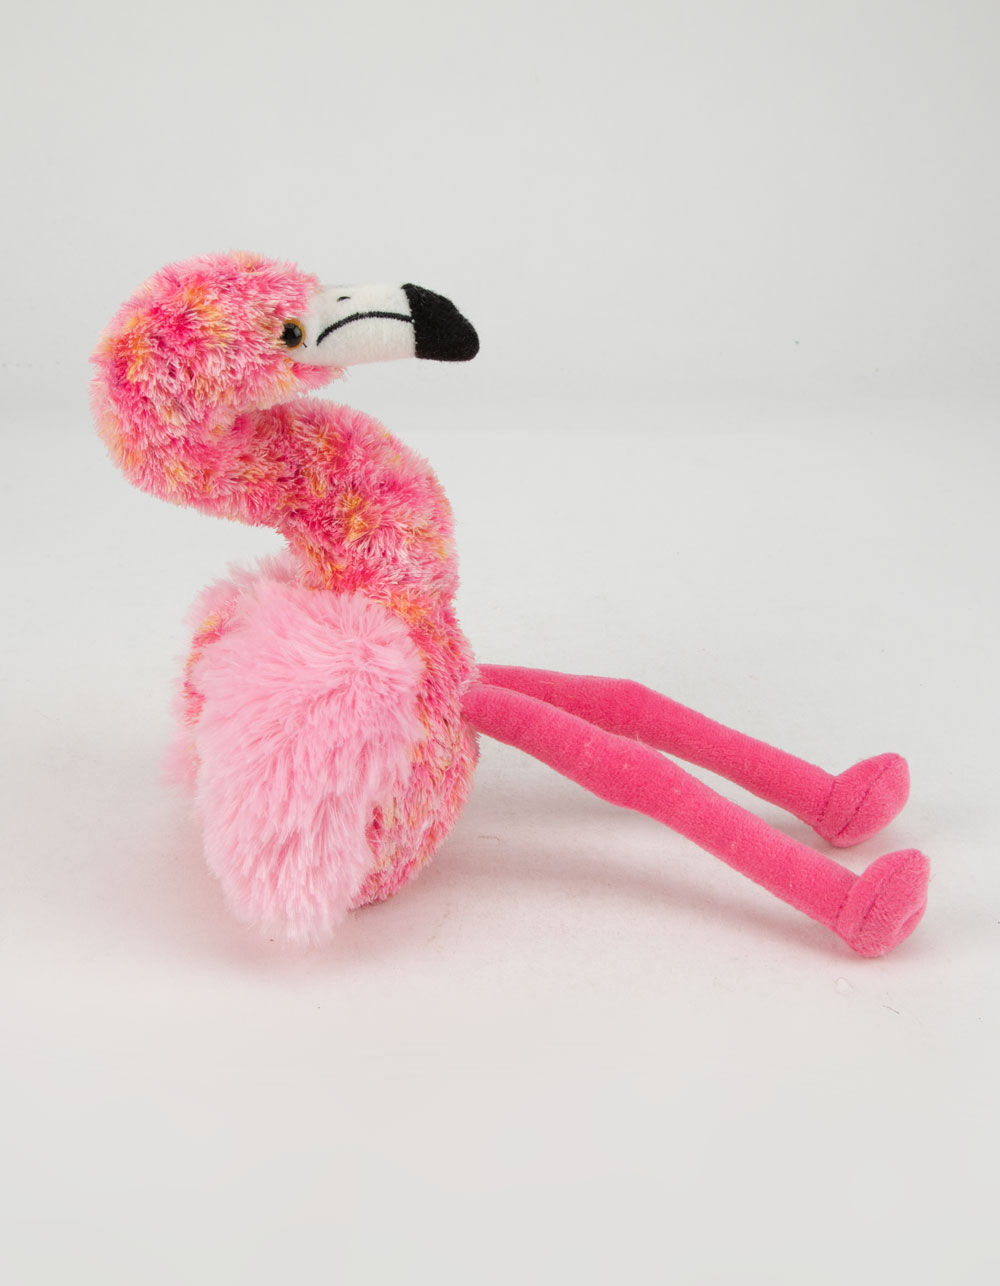 6” Flavia the Flamingo Aurora Brand Plush Stuffed Animal